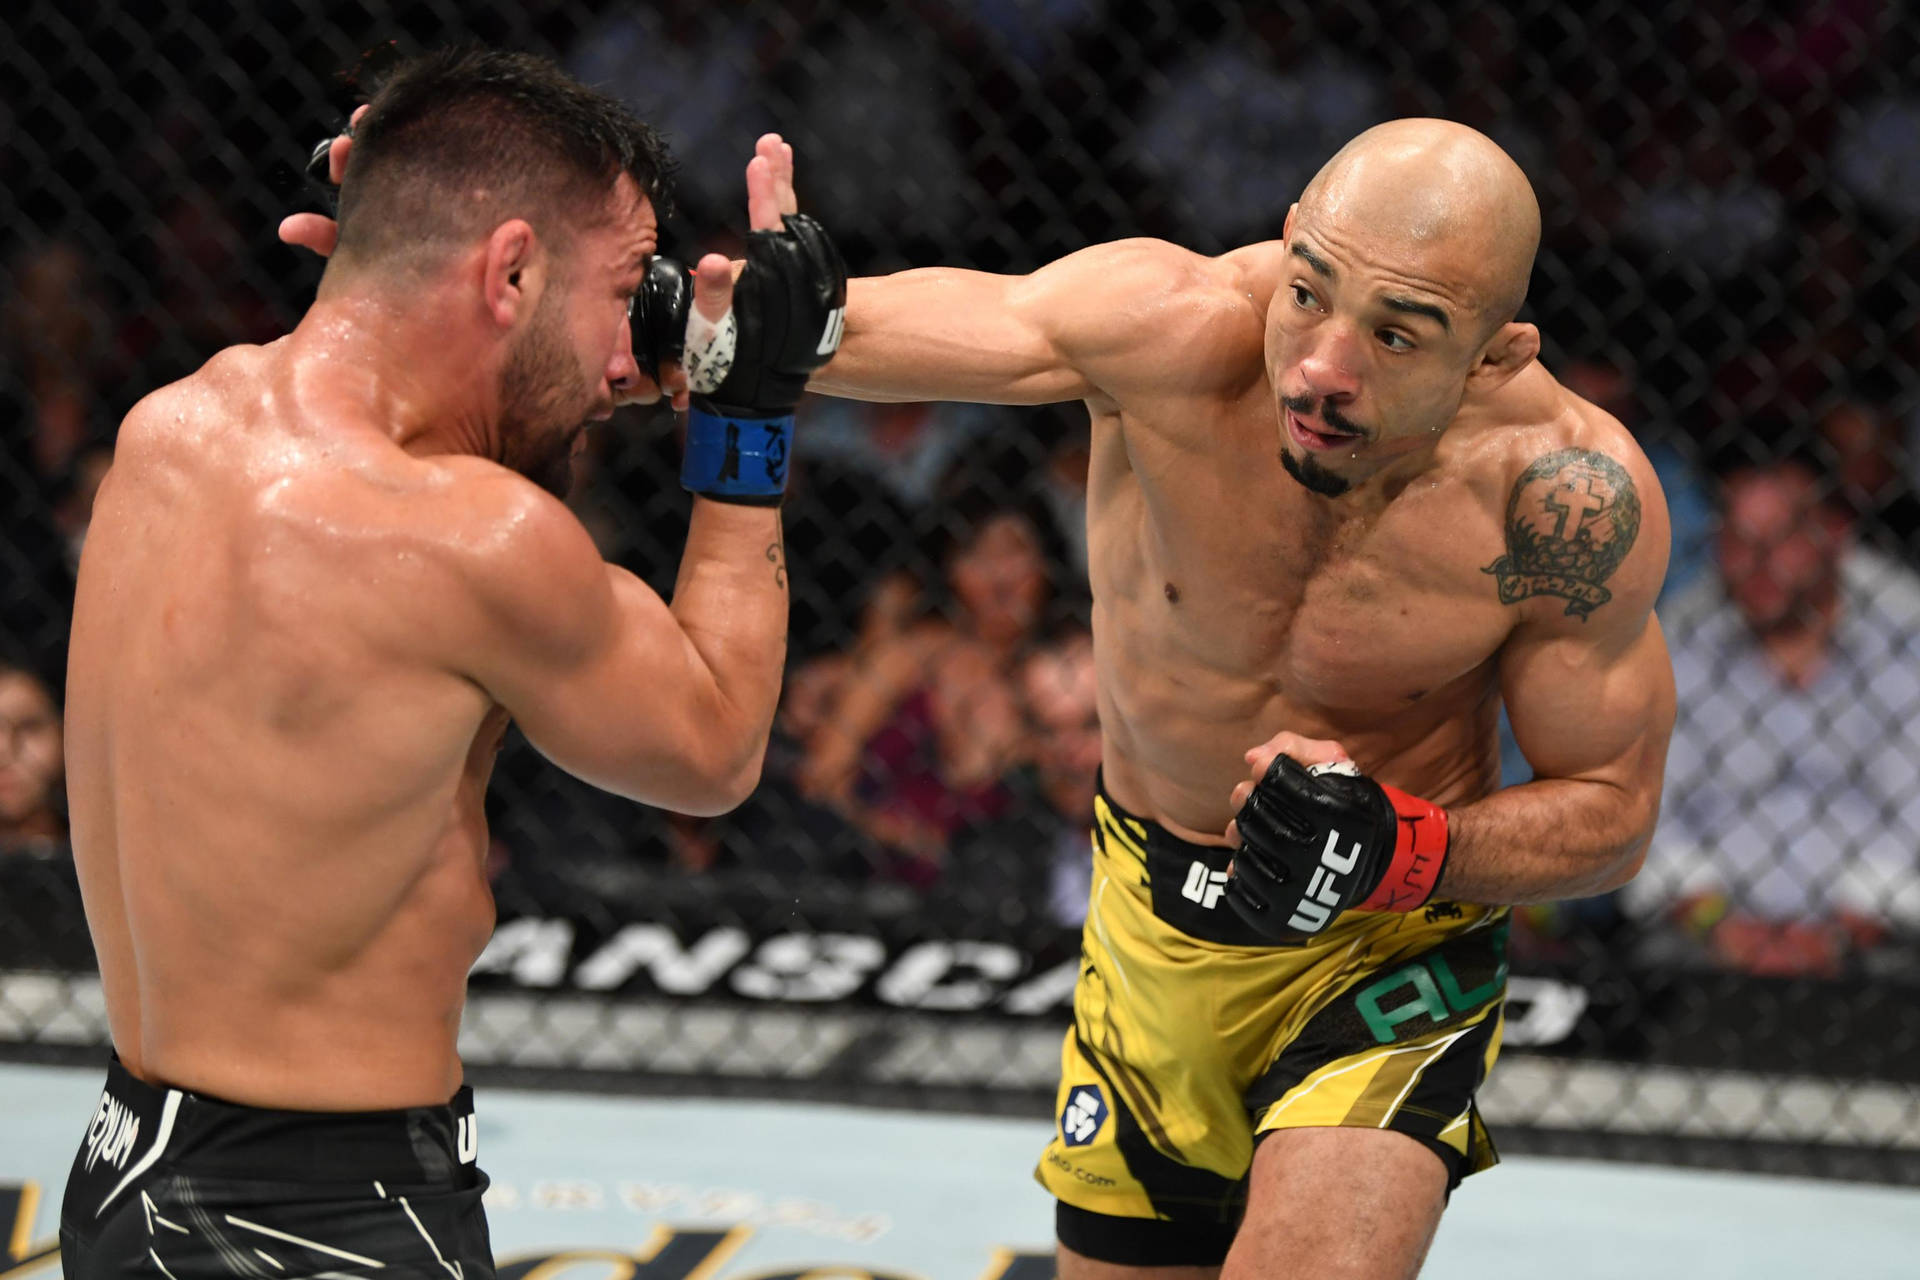 Pedro Munhoz Successfully Blocking Punch in MMA Fight Wallpaper